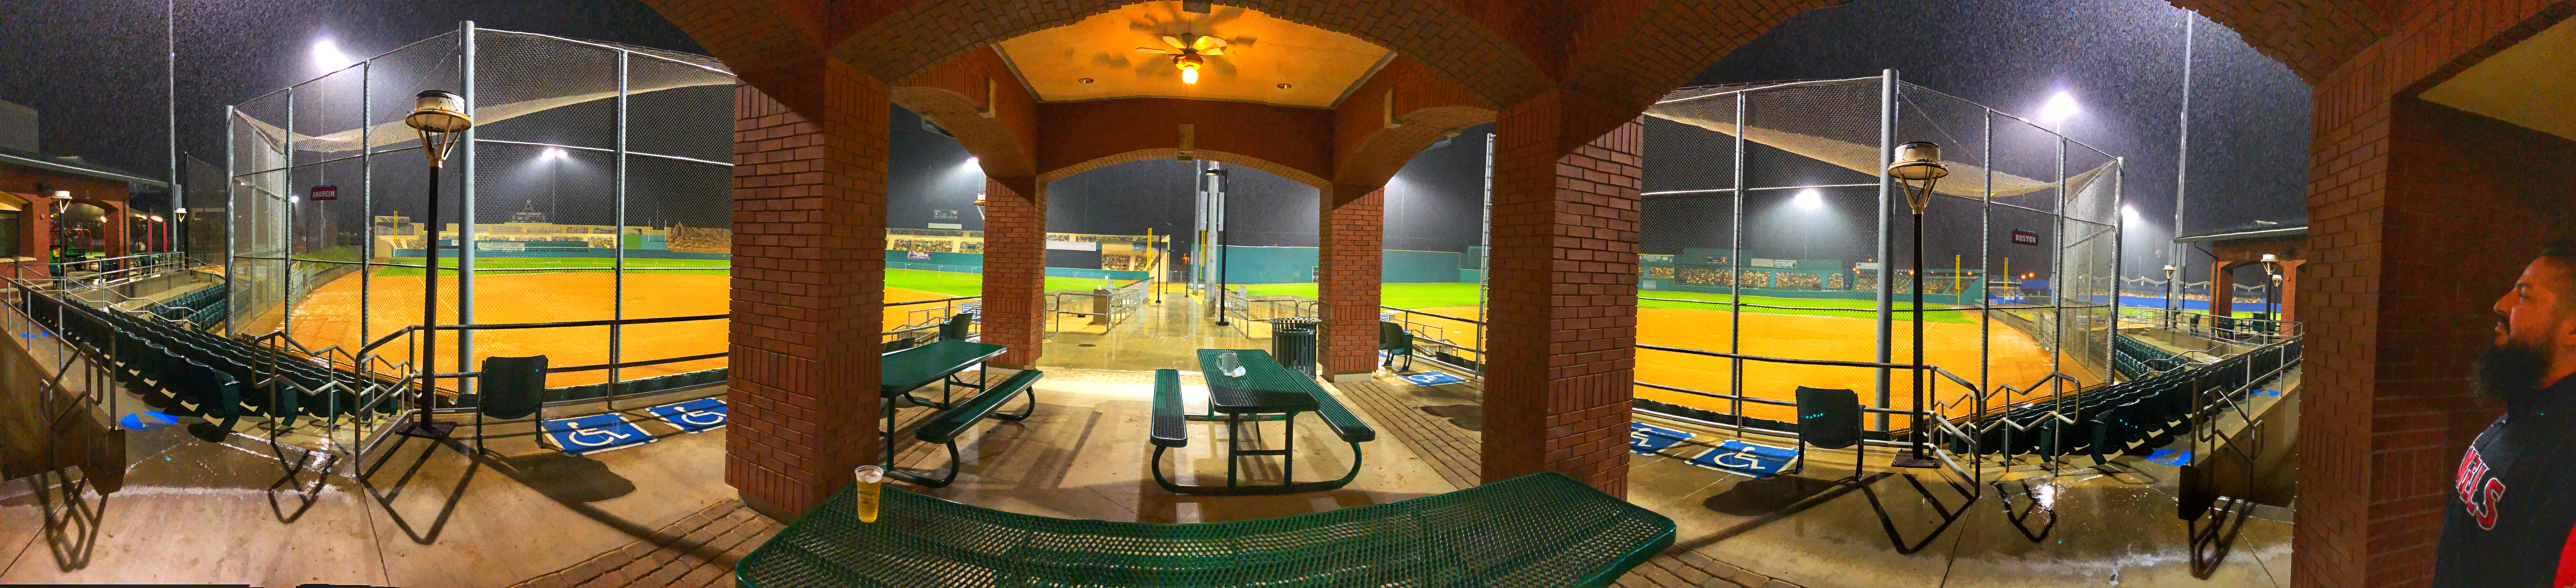 Games are canceled. Bar is open. #rain #softball #perris @bigleaguedreams